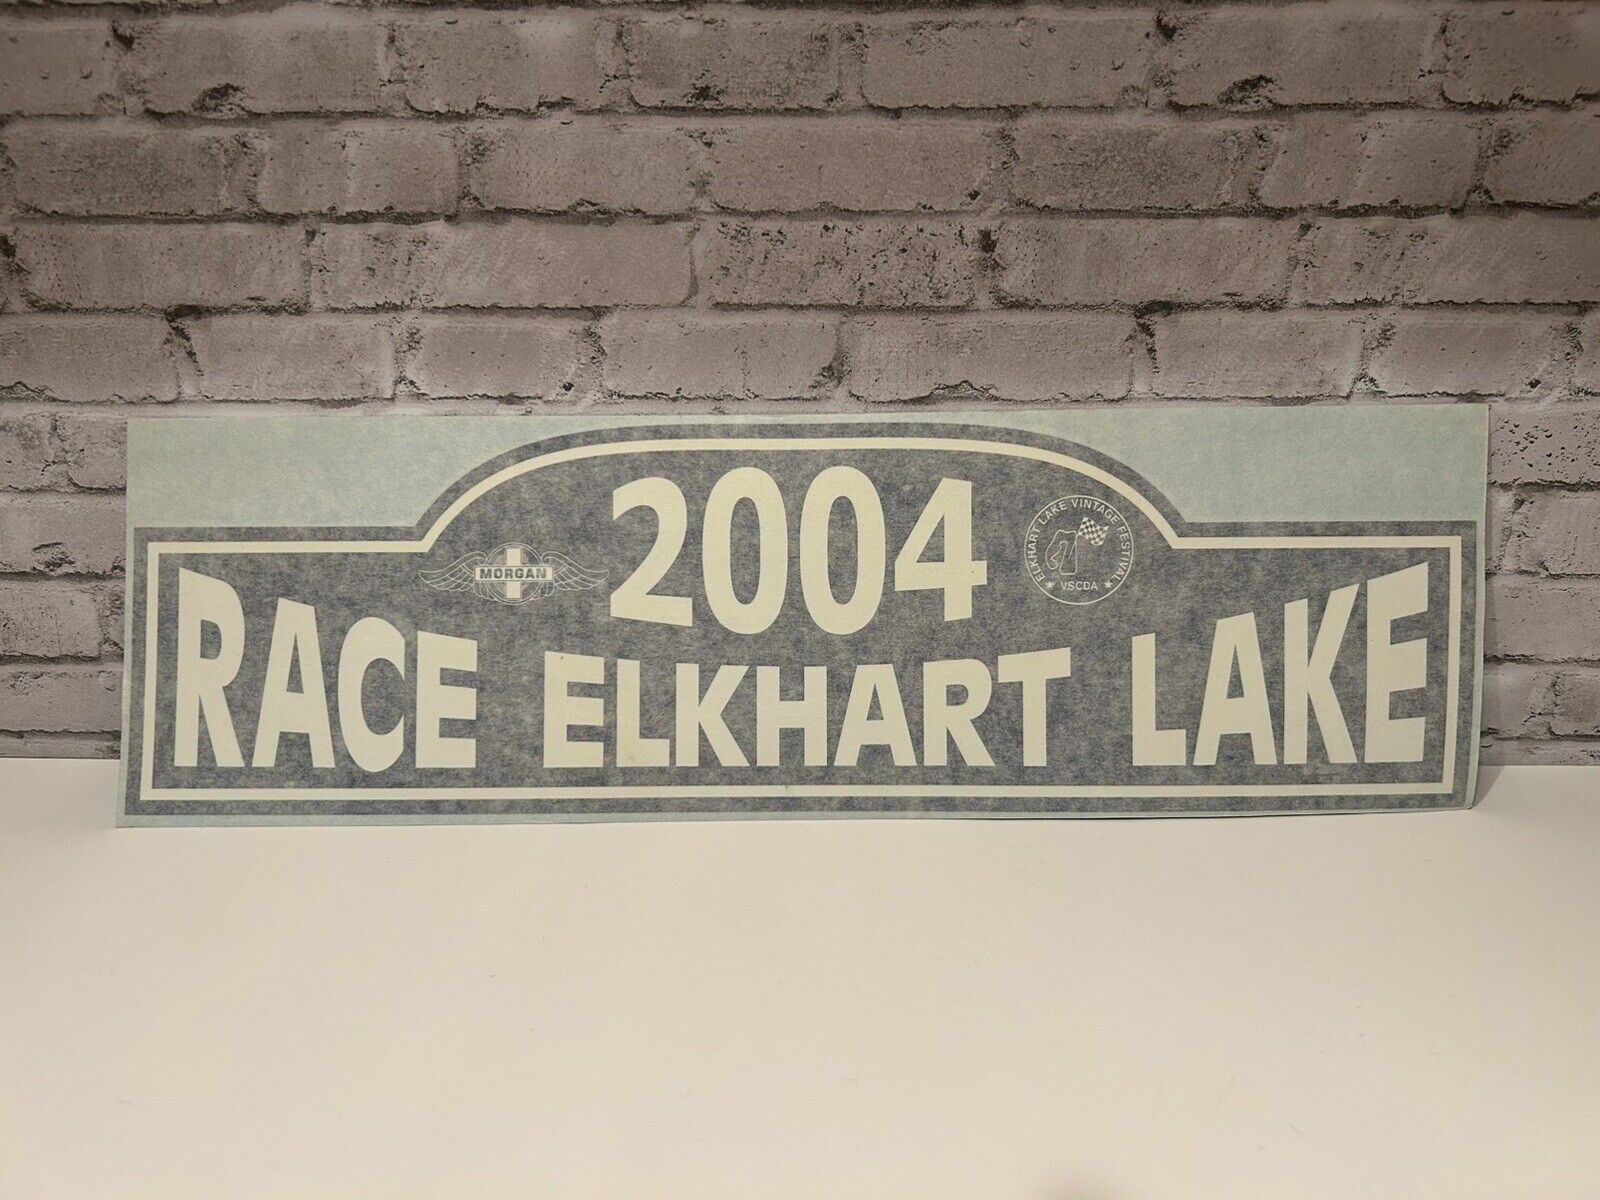 2004 Race Elkhart Lake Large Decal Sticker 18”X 5 1/4” Morgan